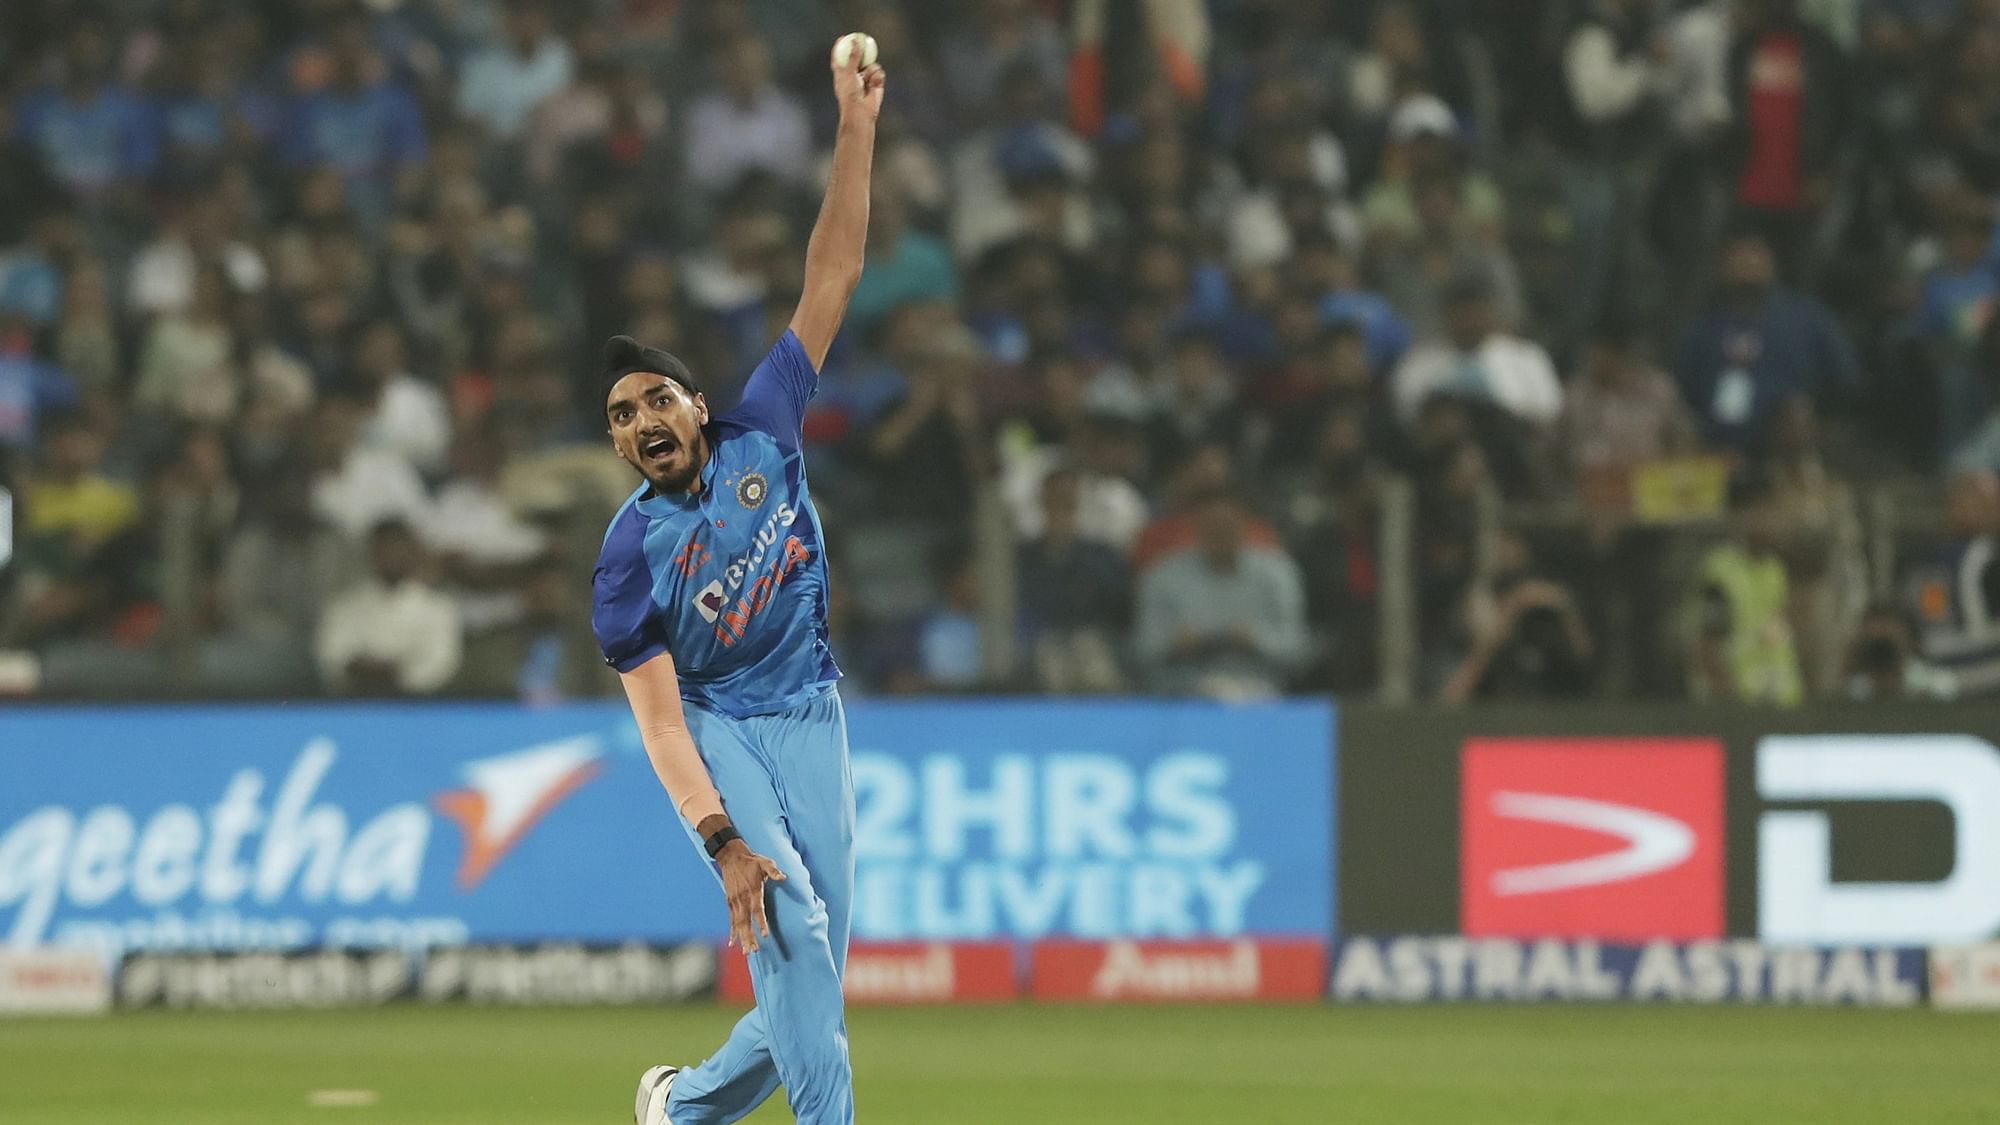 <div class="paragraphs"><p>India vs Sri Lanka: Arshdeep Singh bowled 5 no-balls in India's 16 run loss to Sri Lanka in the 2nd T20I</p></div>